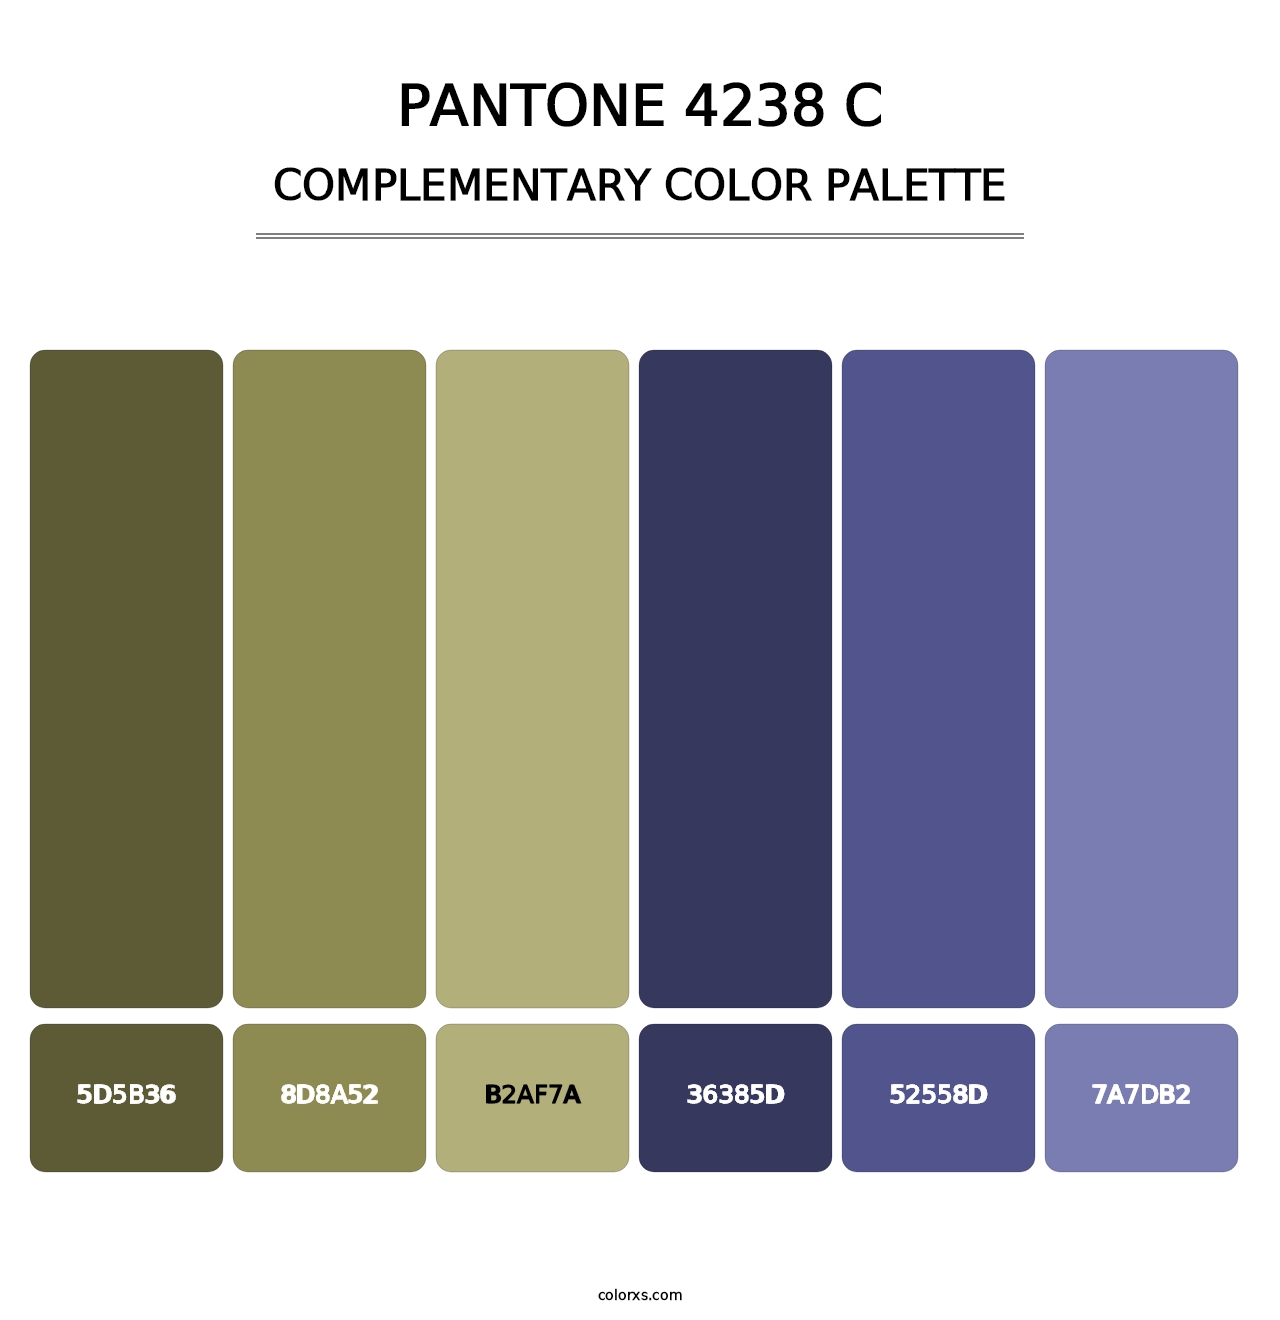 PANTONE 4238 C - Complementary Color Palette